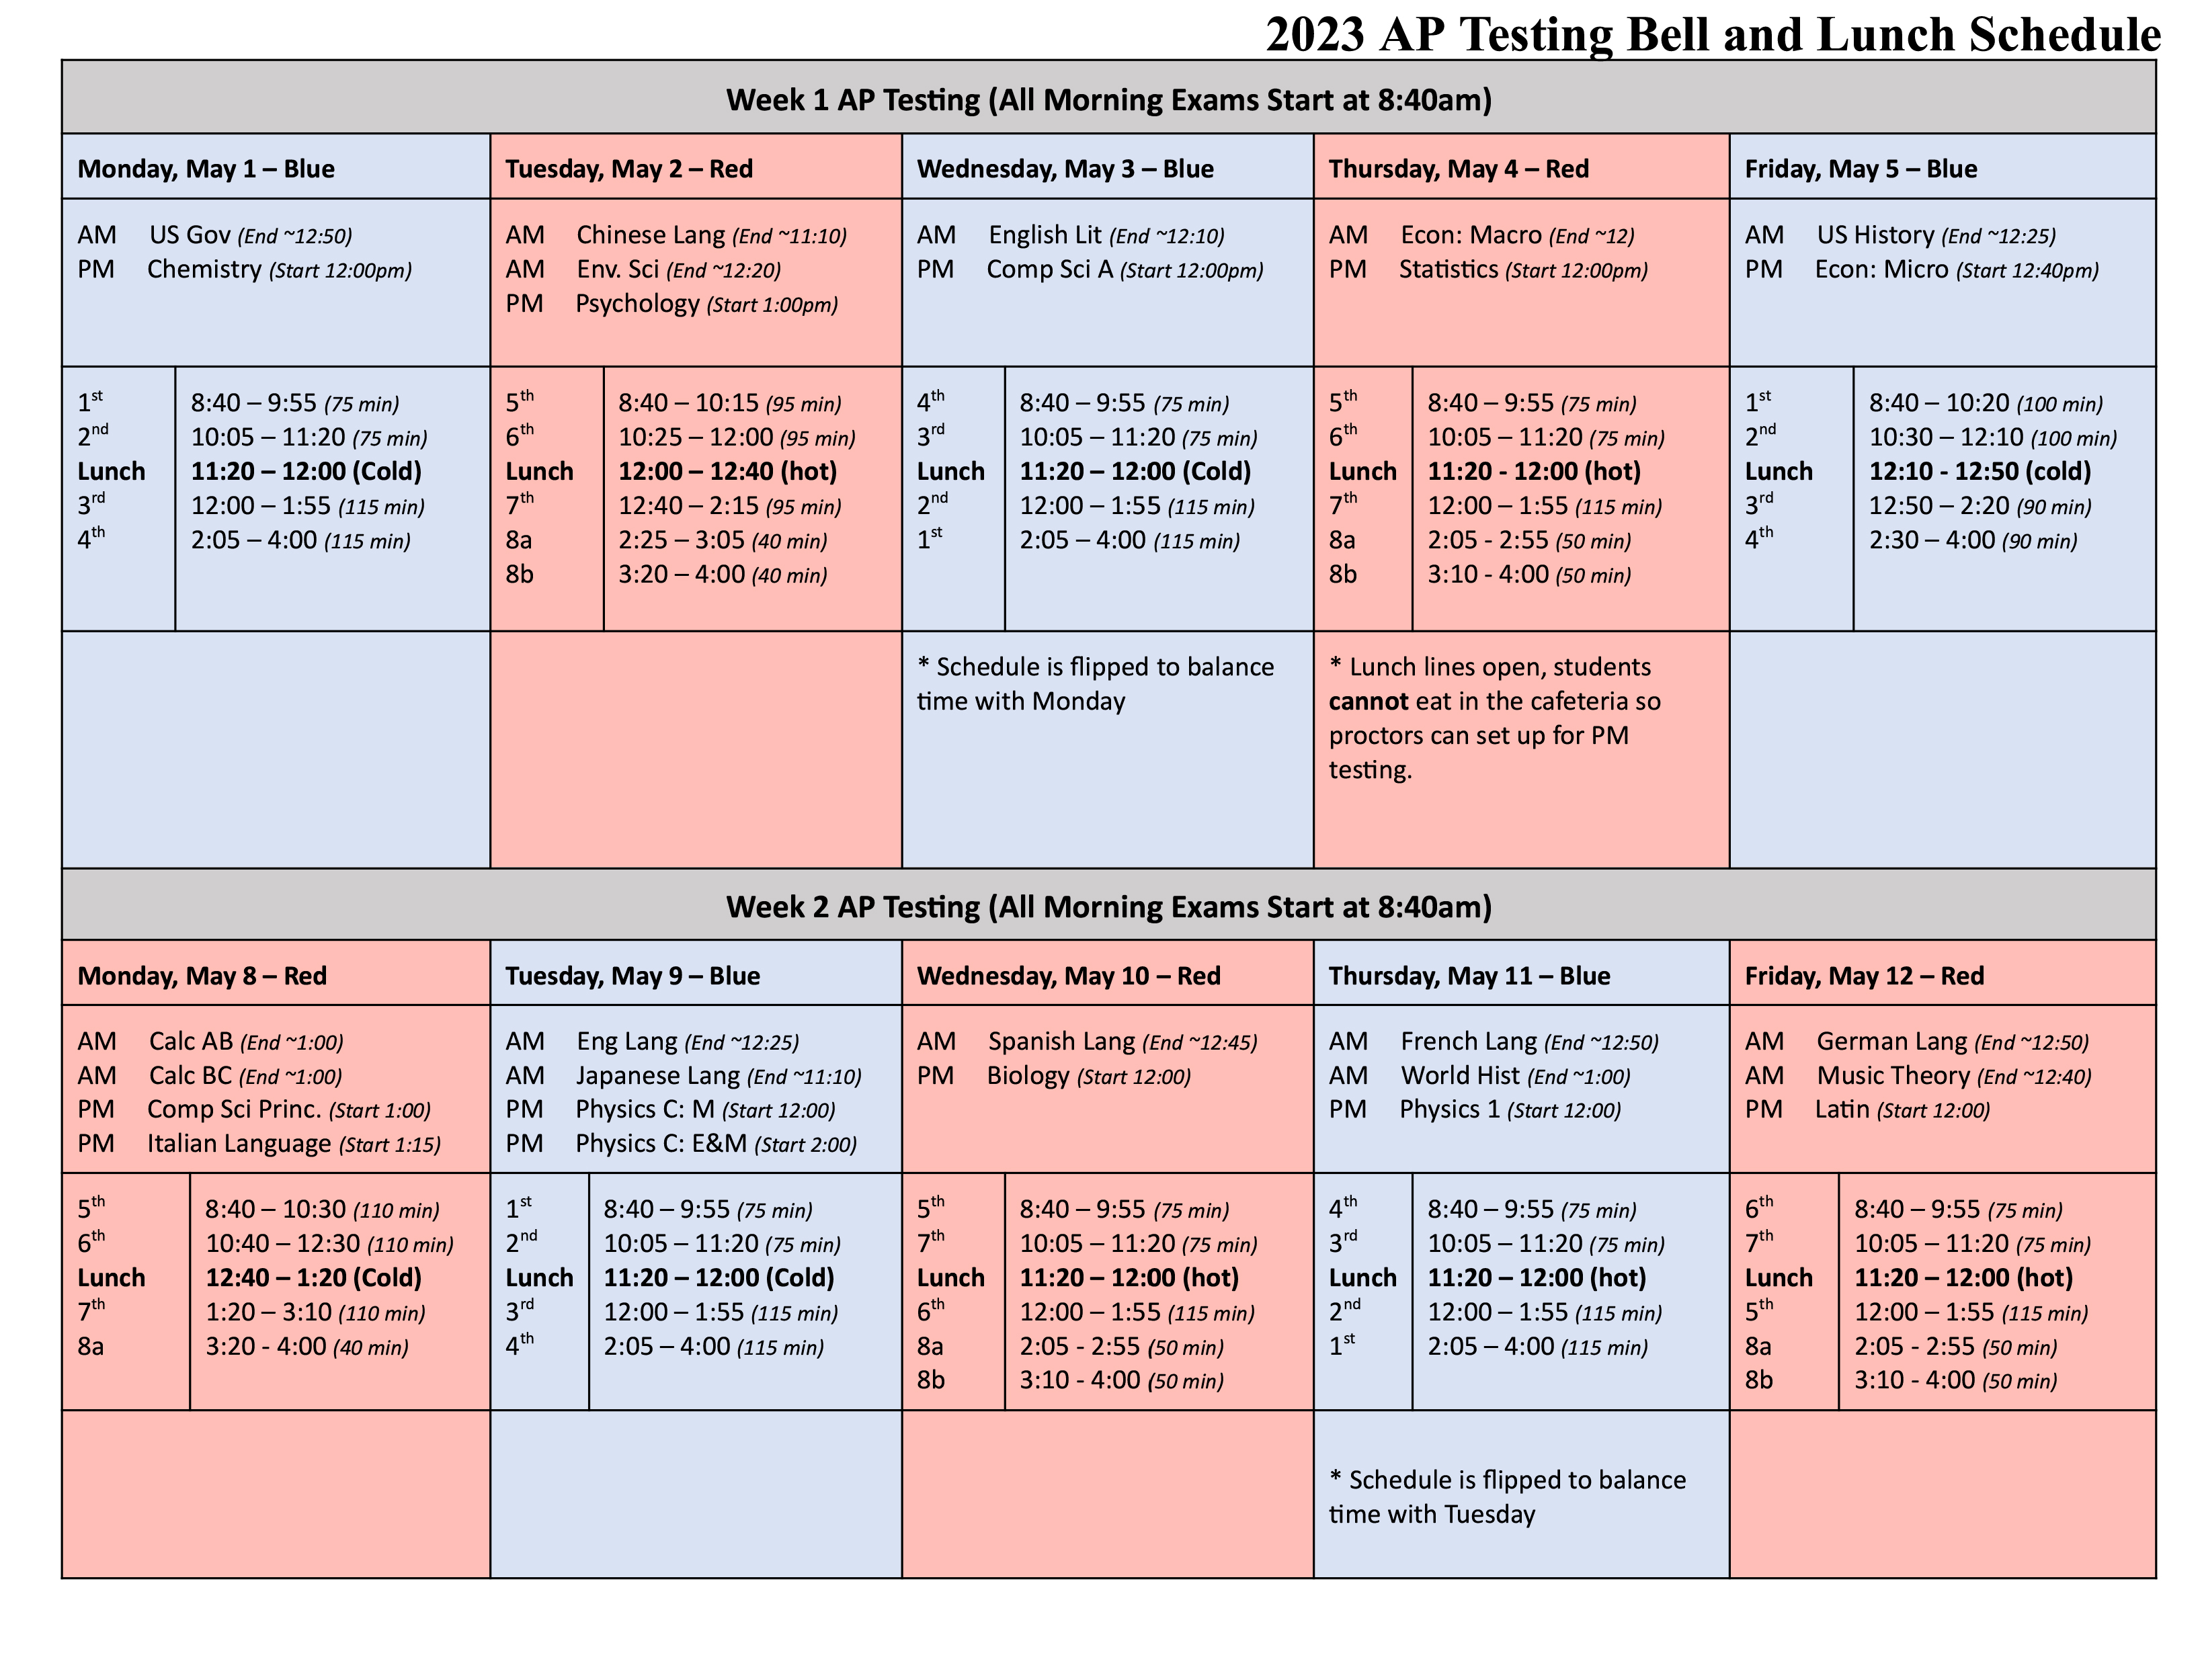 AP Testing Schedule 2023